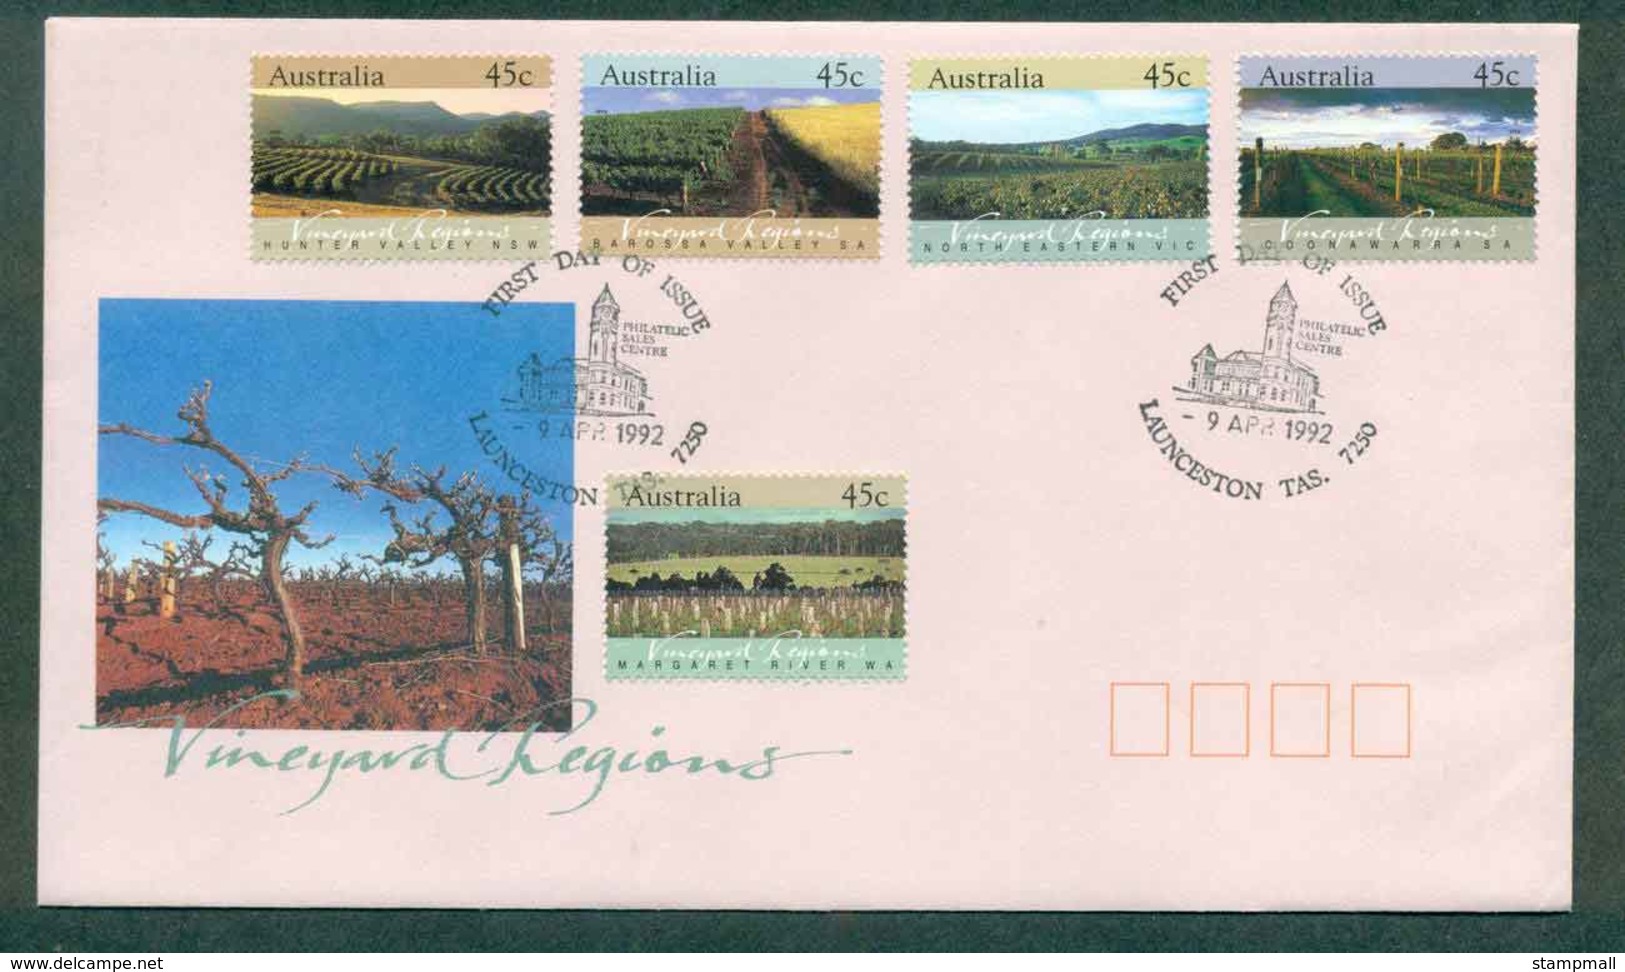 Australia 1992 Vineyard Regions, Launceston FDC Lot51076 - Covers & Documents